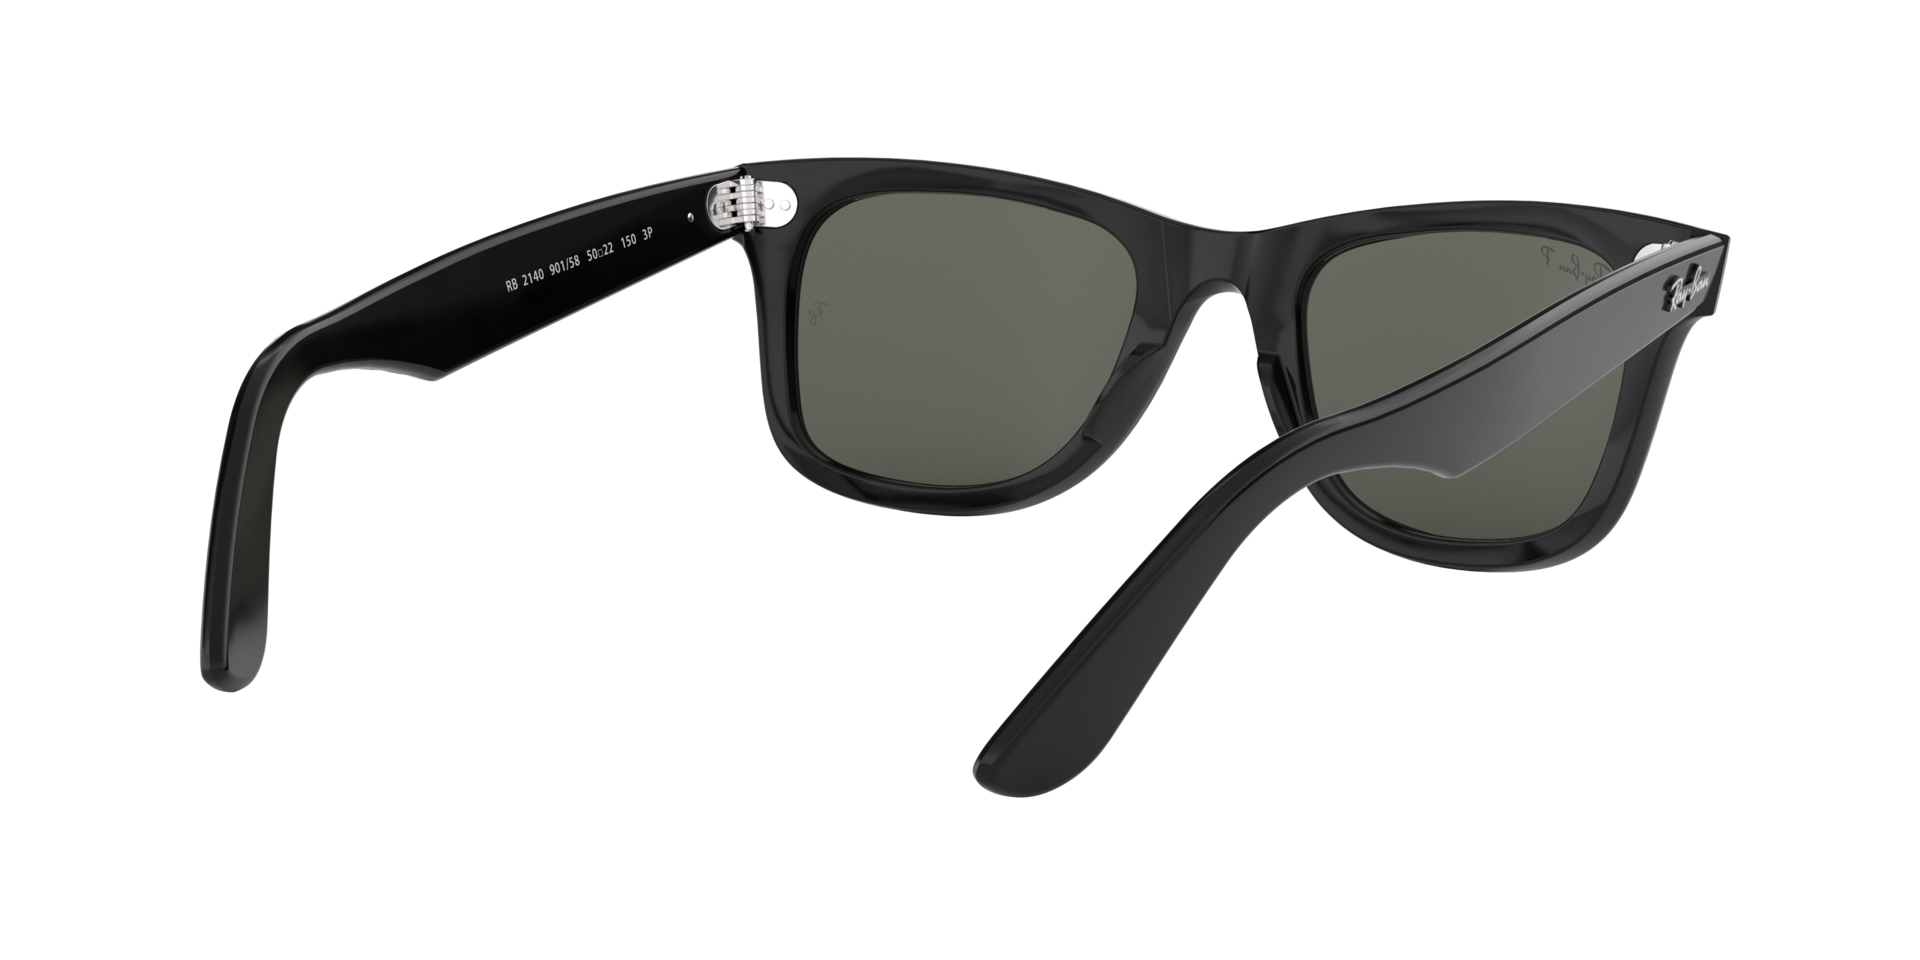 Buy Ray-Ban Original Wayfarer Classic Sunglasses Online.